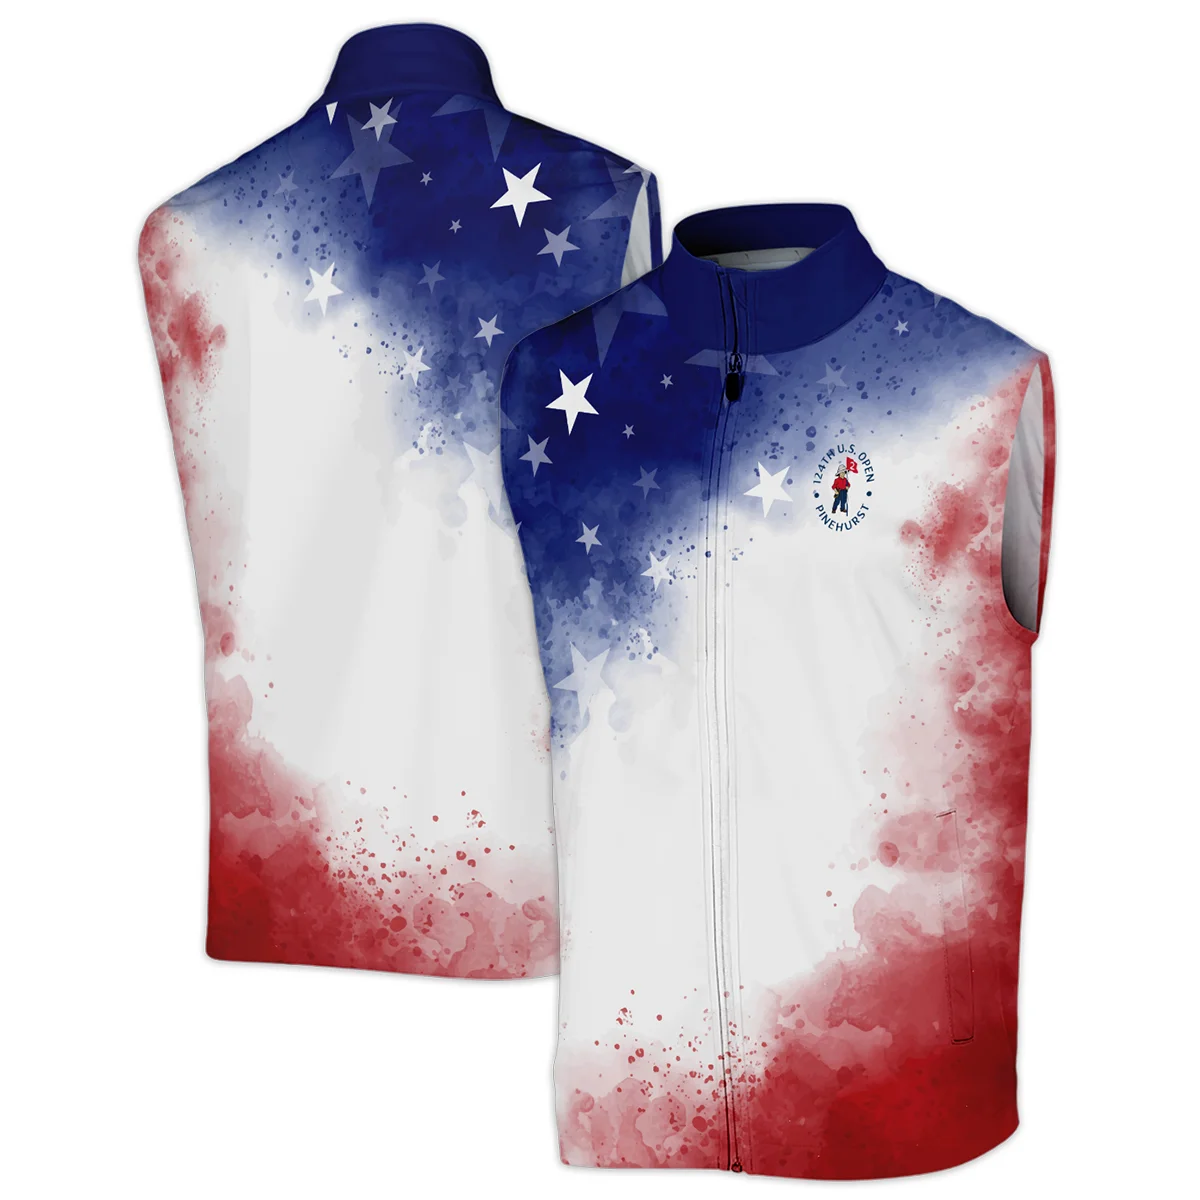 124th U.S. Open Pinehurst Callaway Blue Red Watercolor Star White Backgound Unisex Sweatshirt Style Classic Sweatshirt